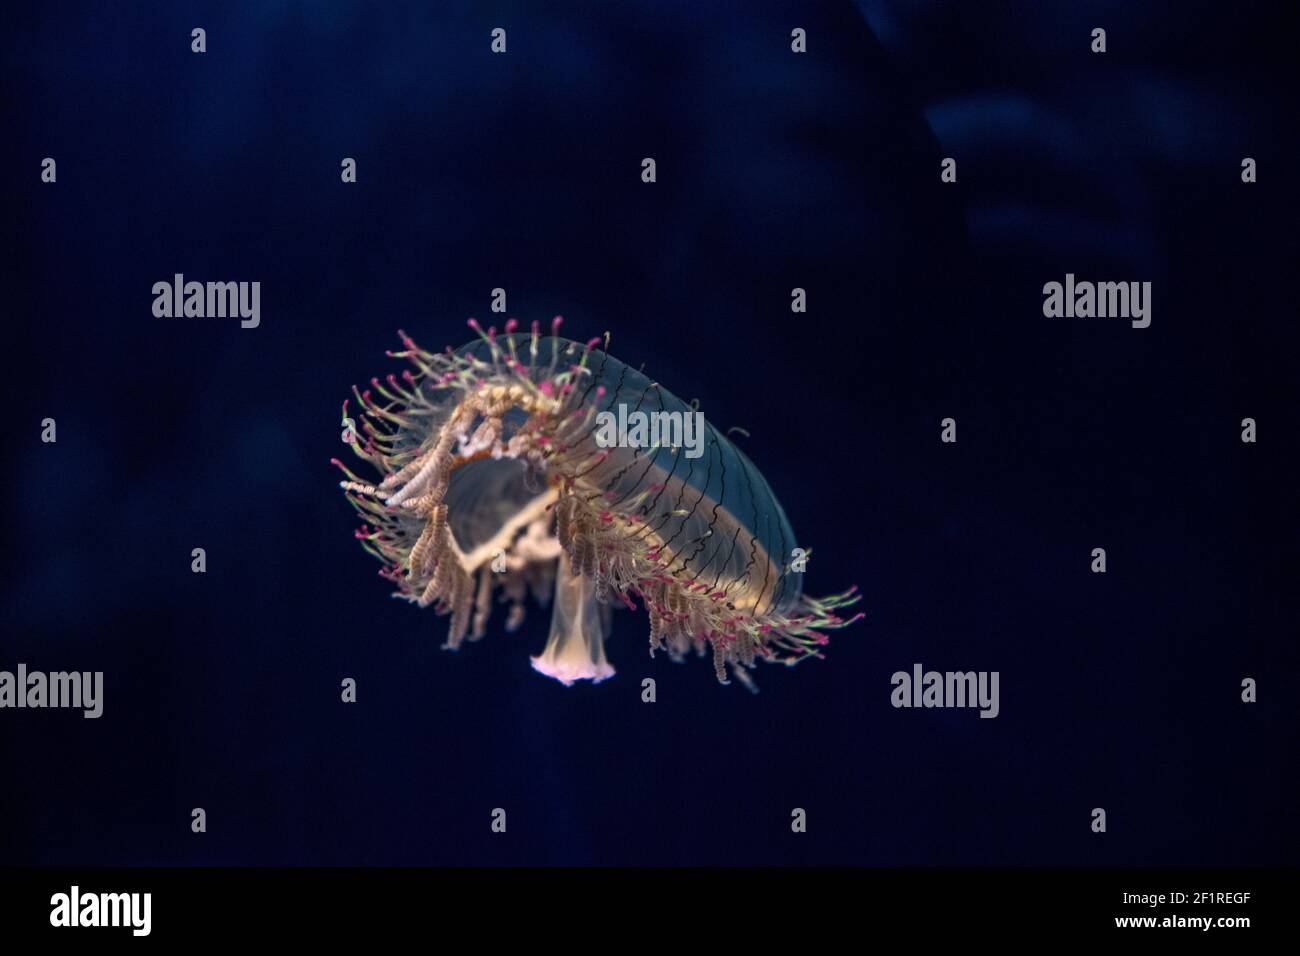 illuminated flower hat jellyfish floating in aquarium Stock Photo